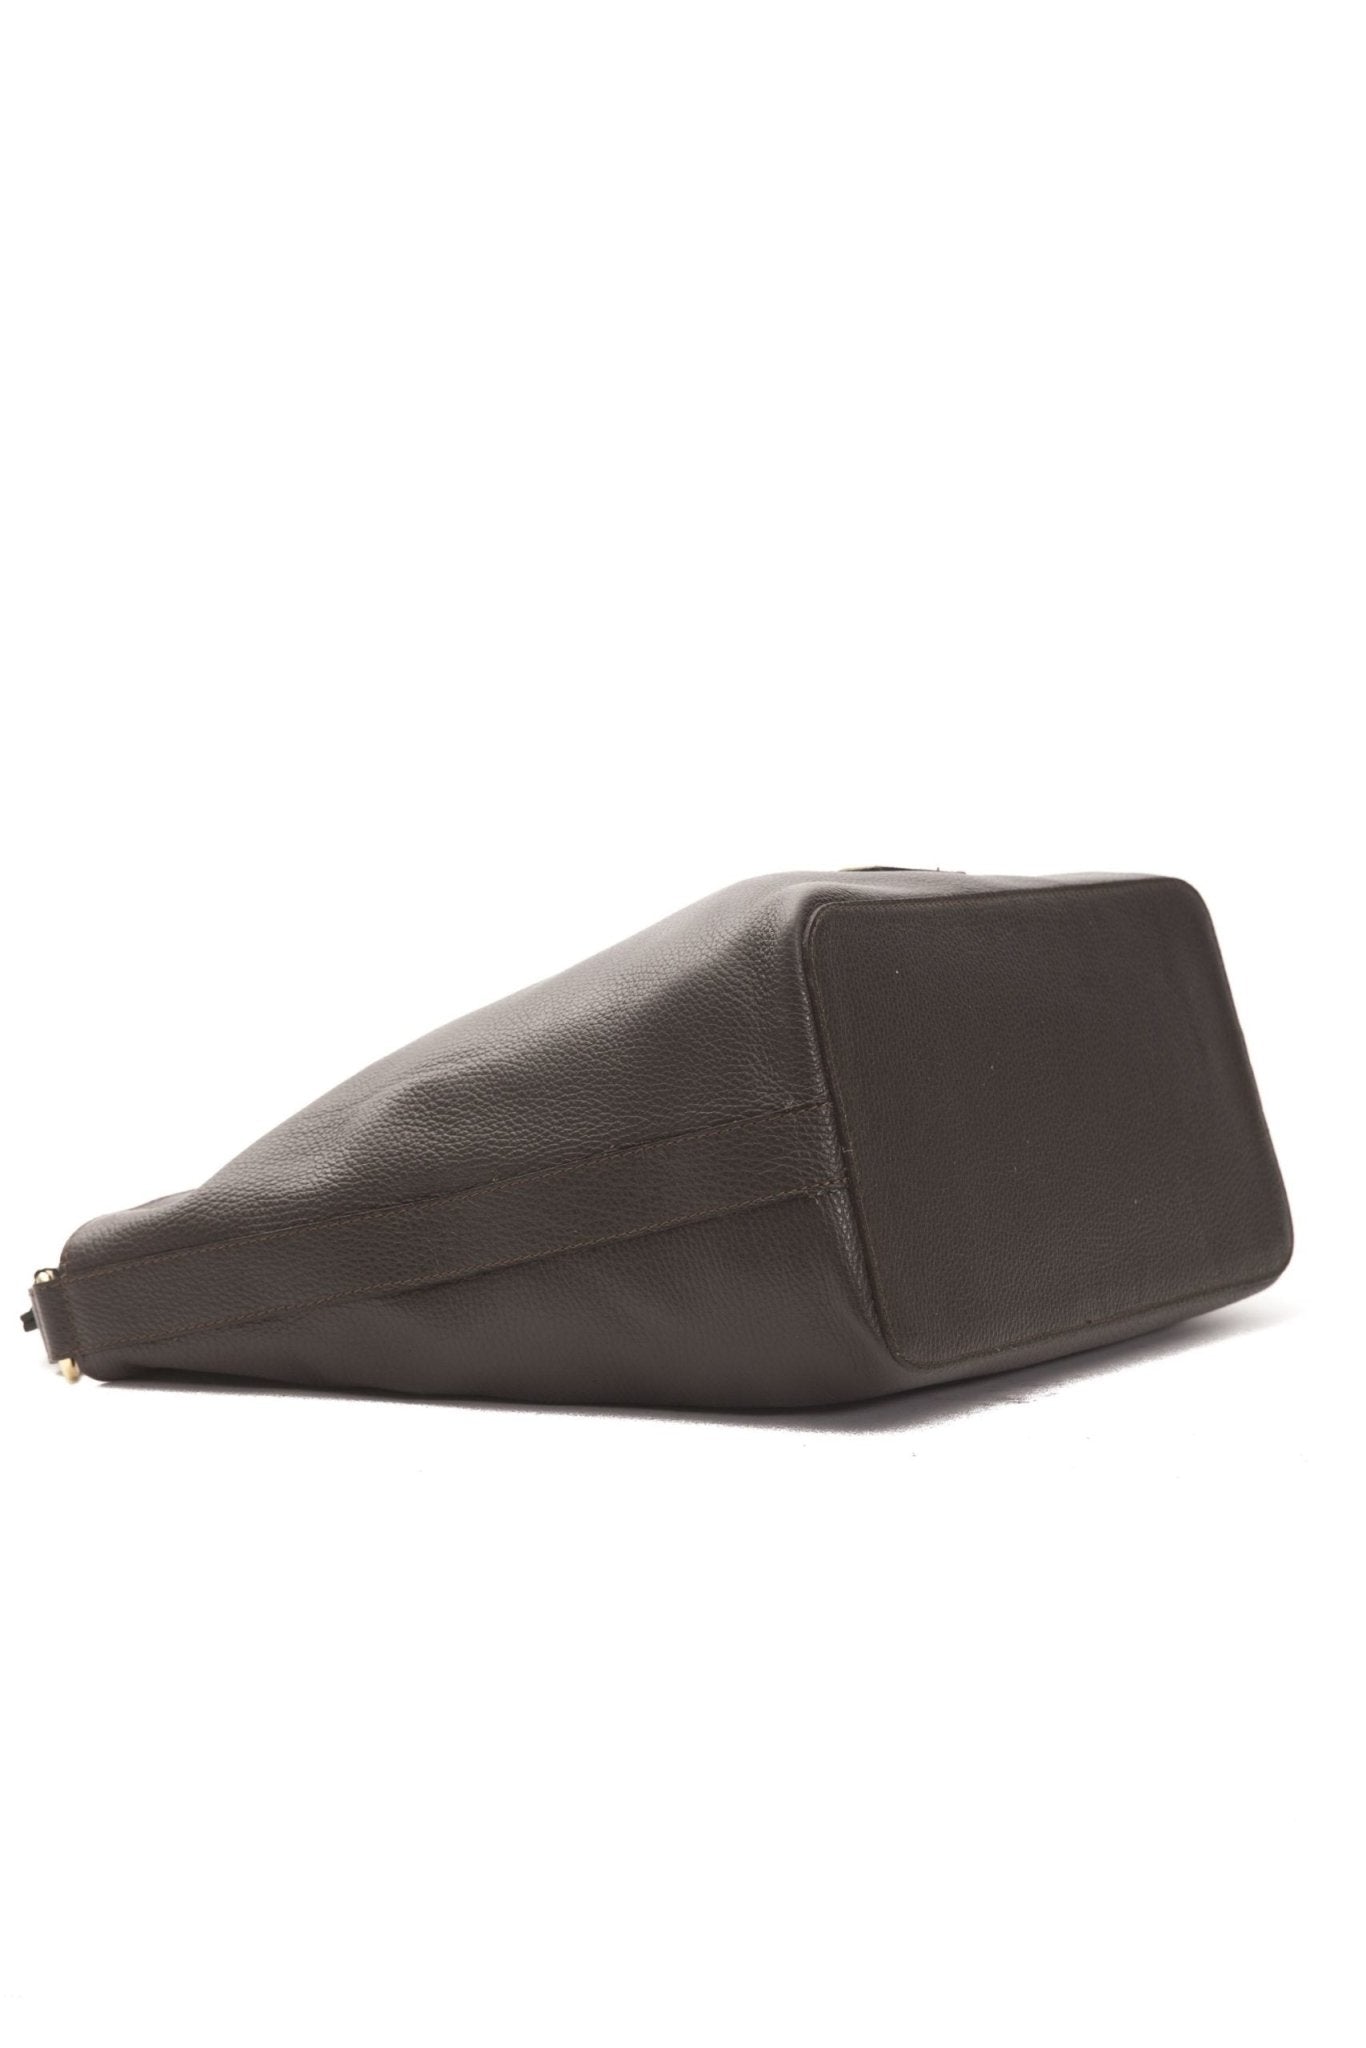 Pompei Donatella Brown Leather Shoulder Bag - Fizigo